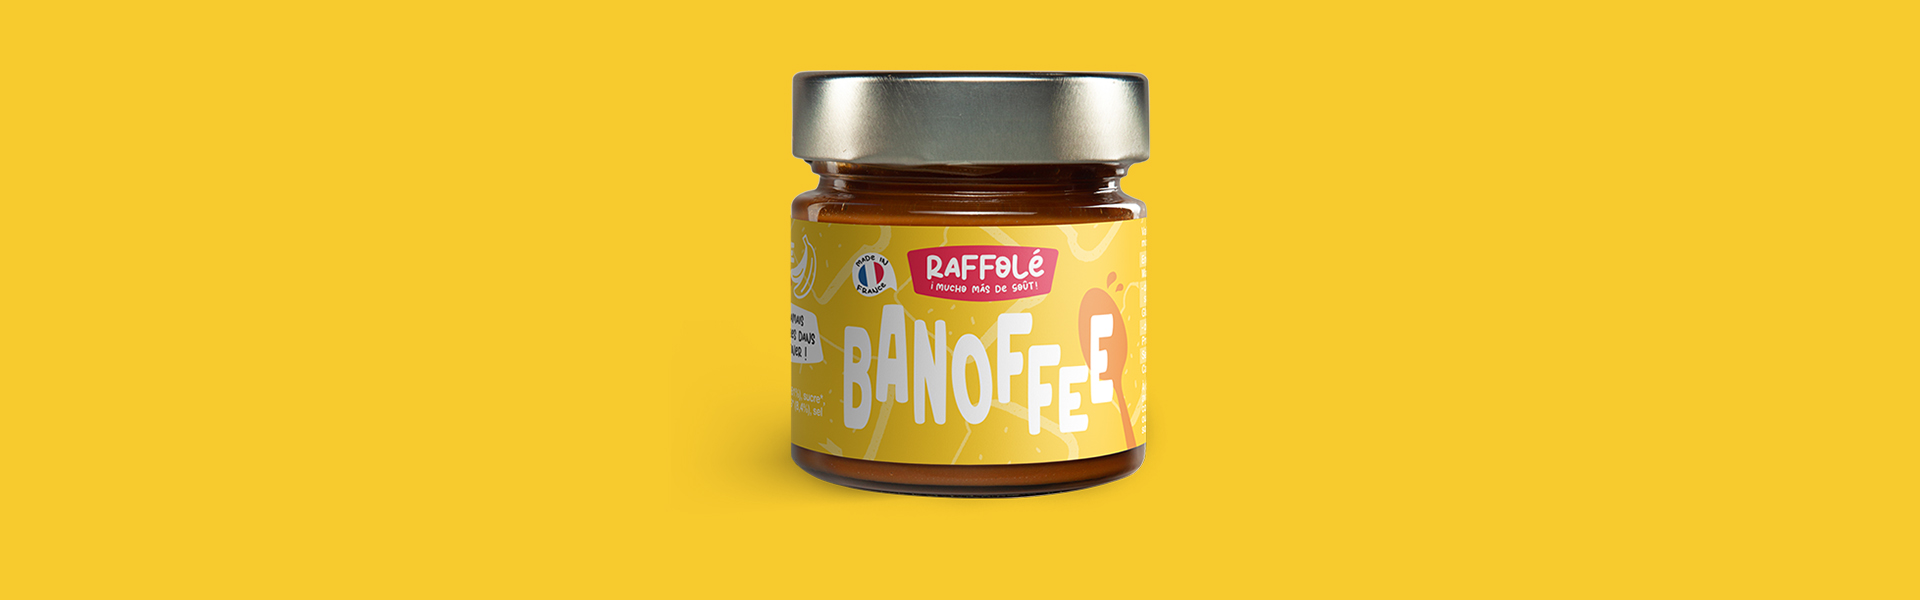 pâte à tartiner Banoffee Raffolé